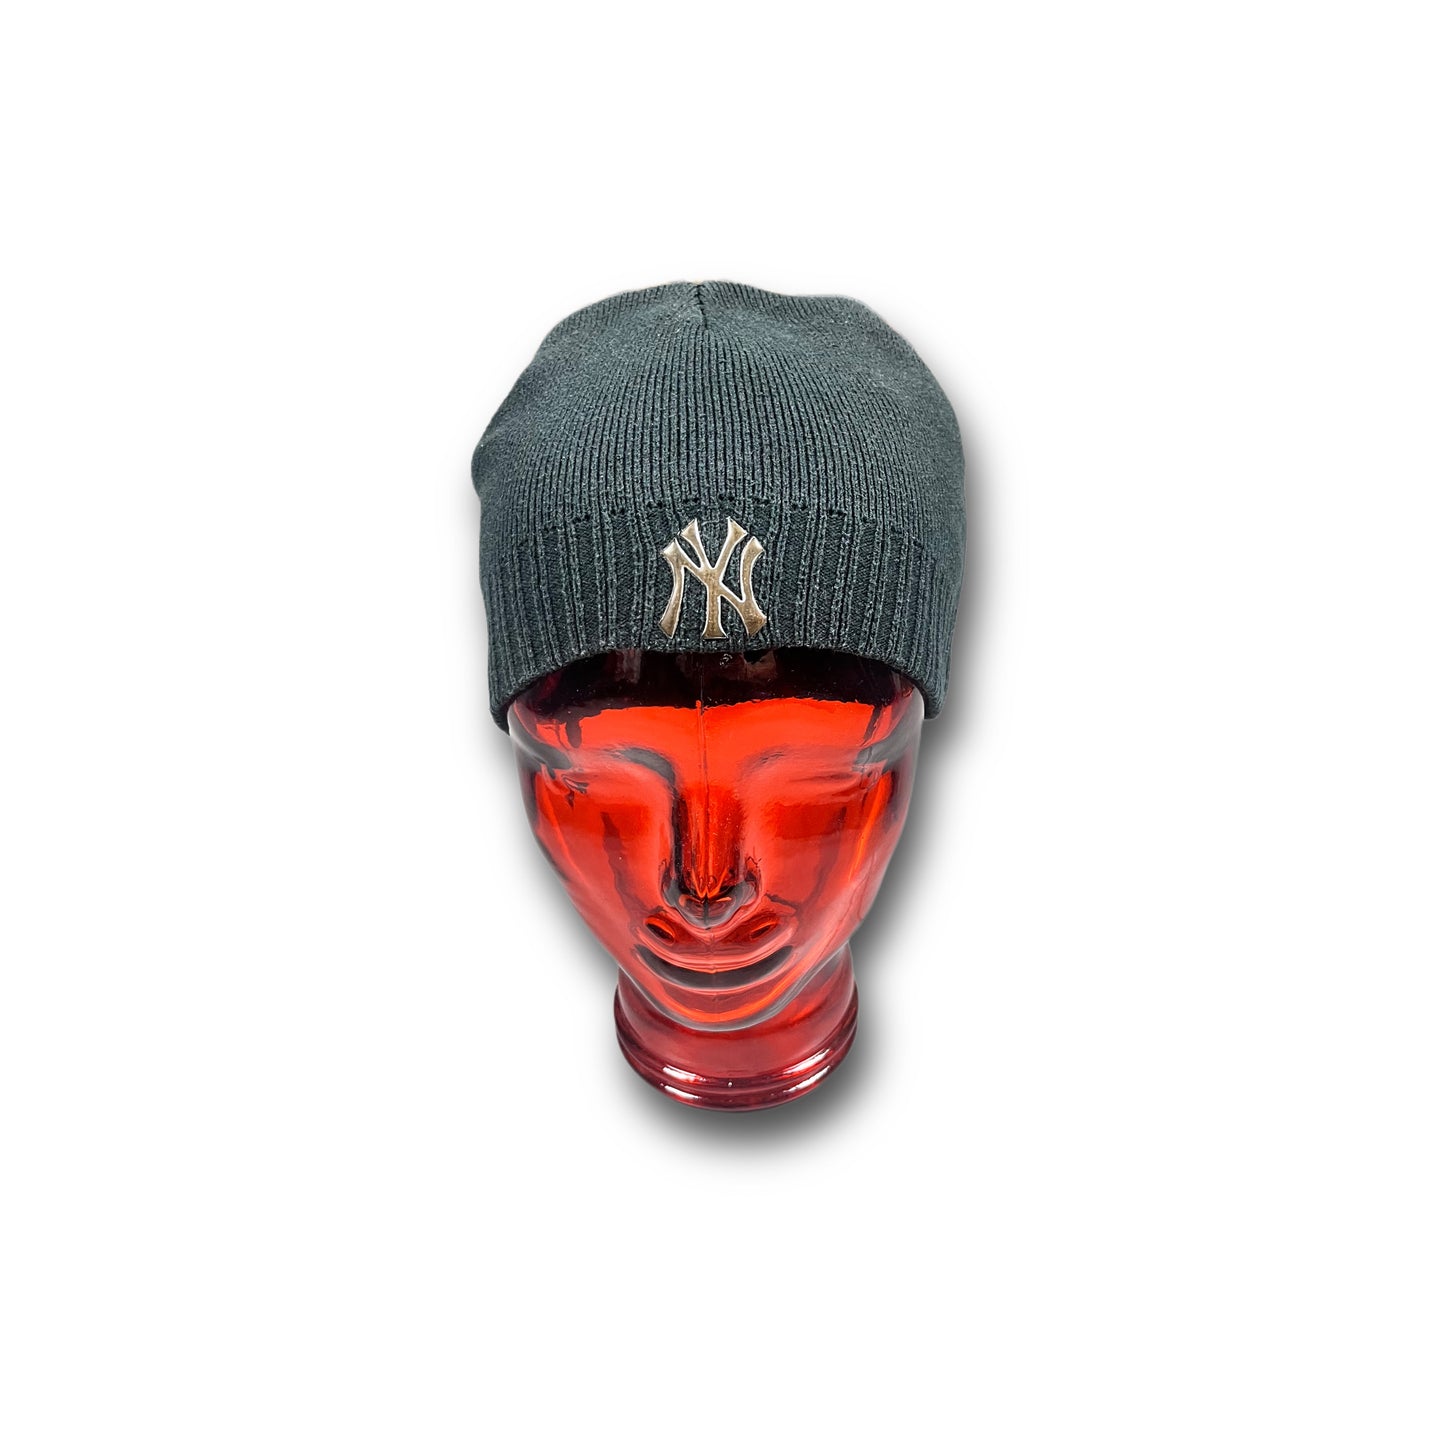 New York Yankees Beanie Vintage black